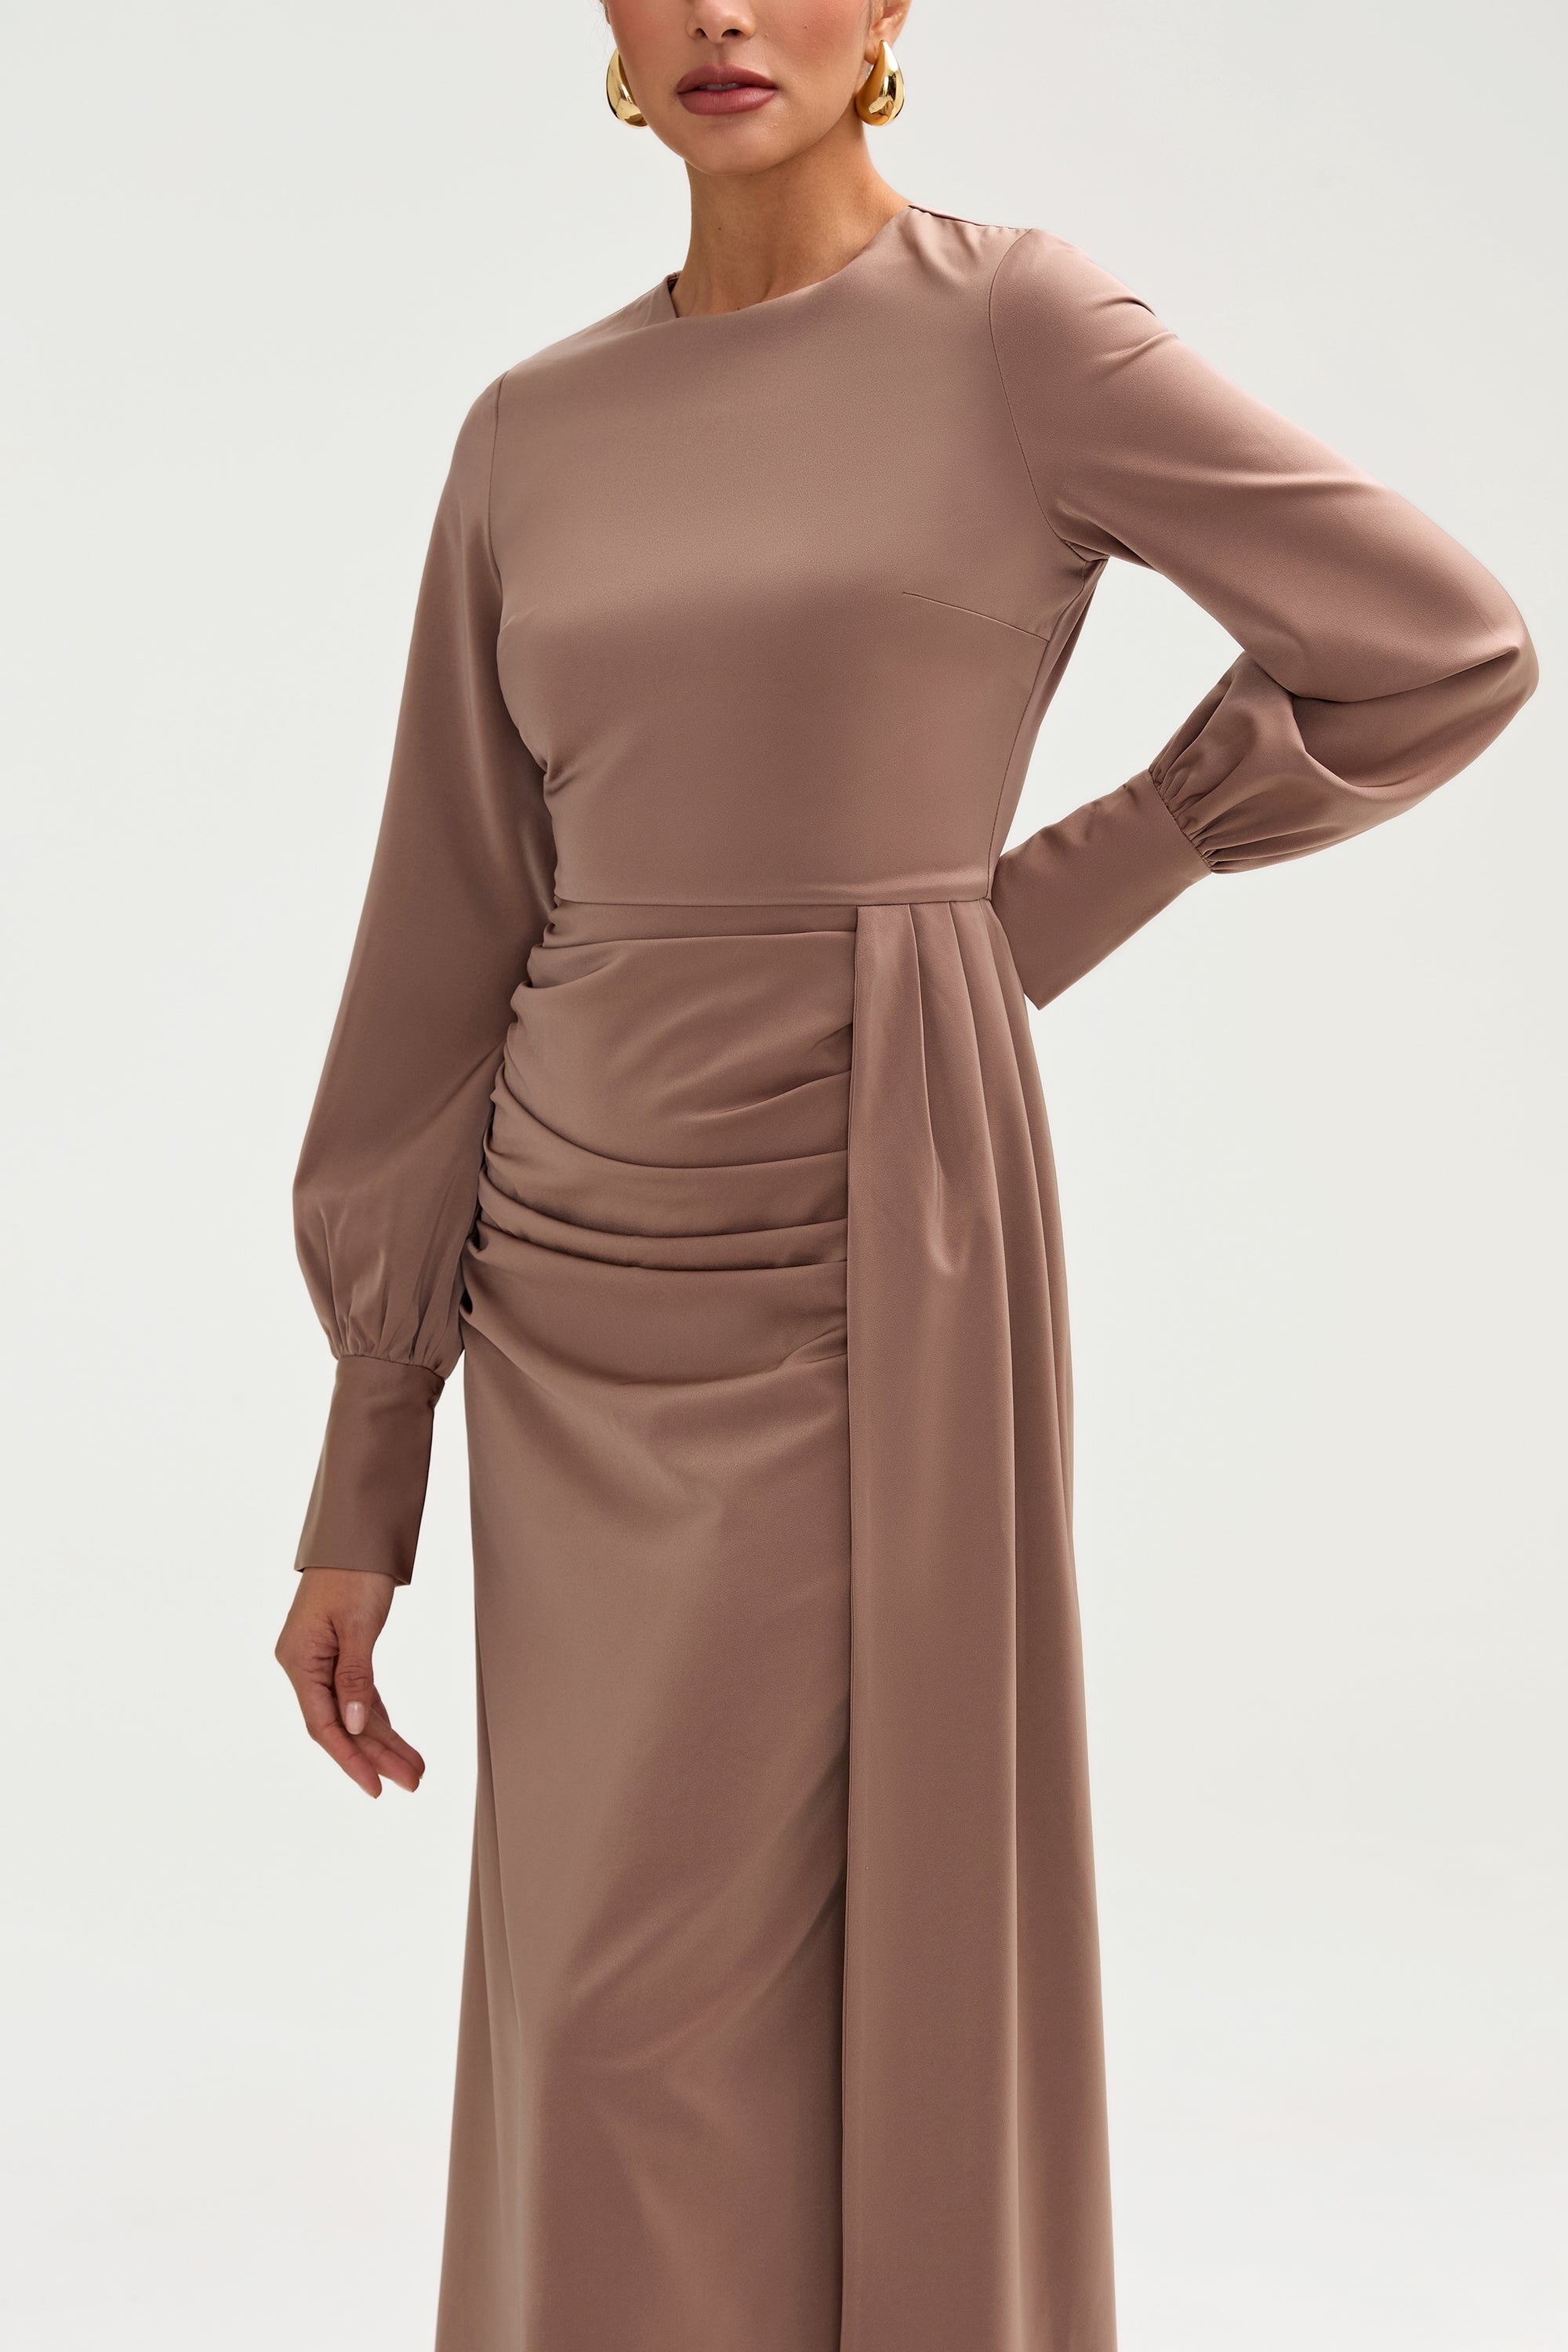 Laylani Satin Rouched Maxi Dress - Taupe Clothing epschoolboard 